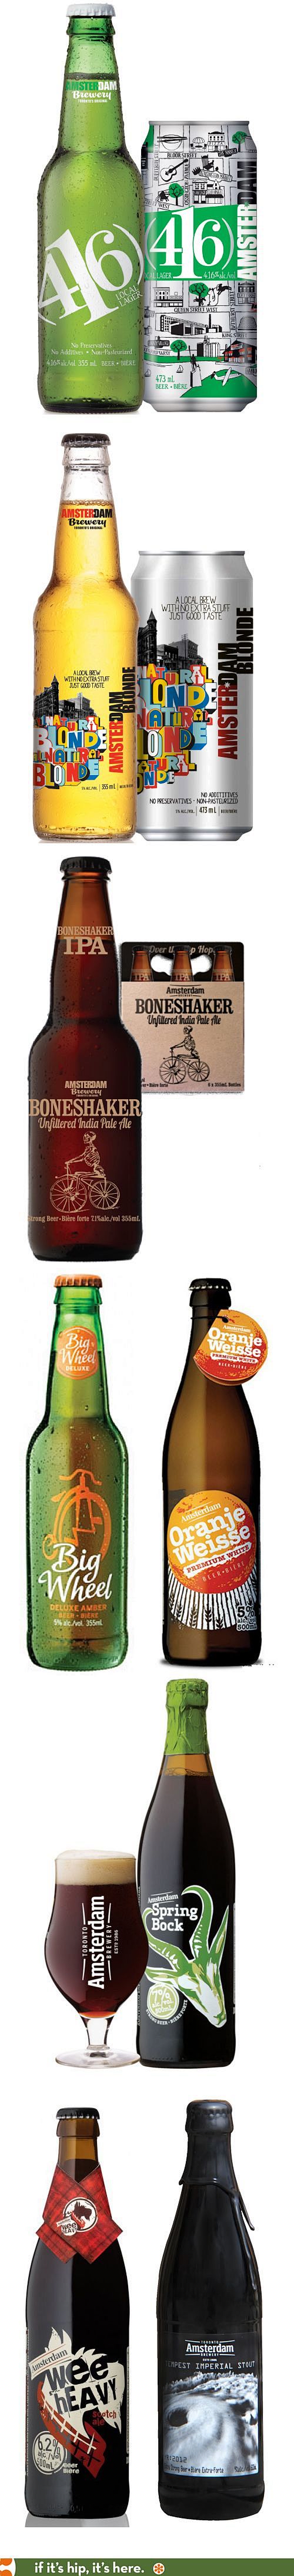 Amsterdam Brewery's ...